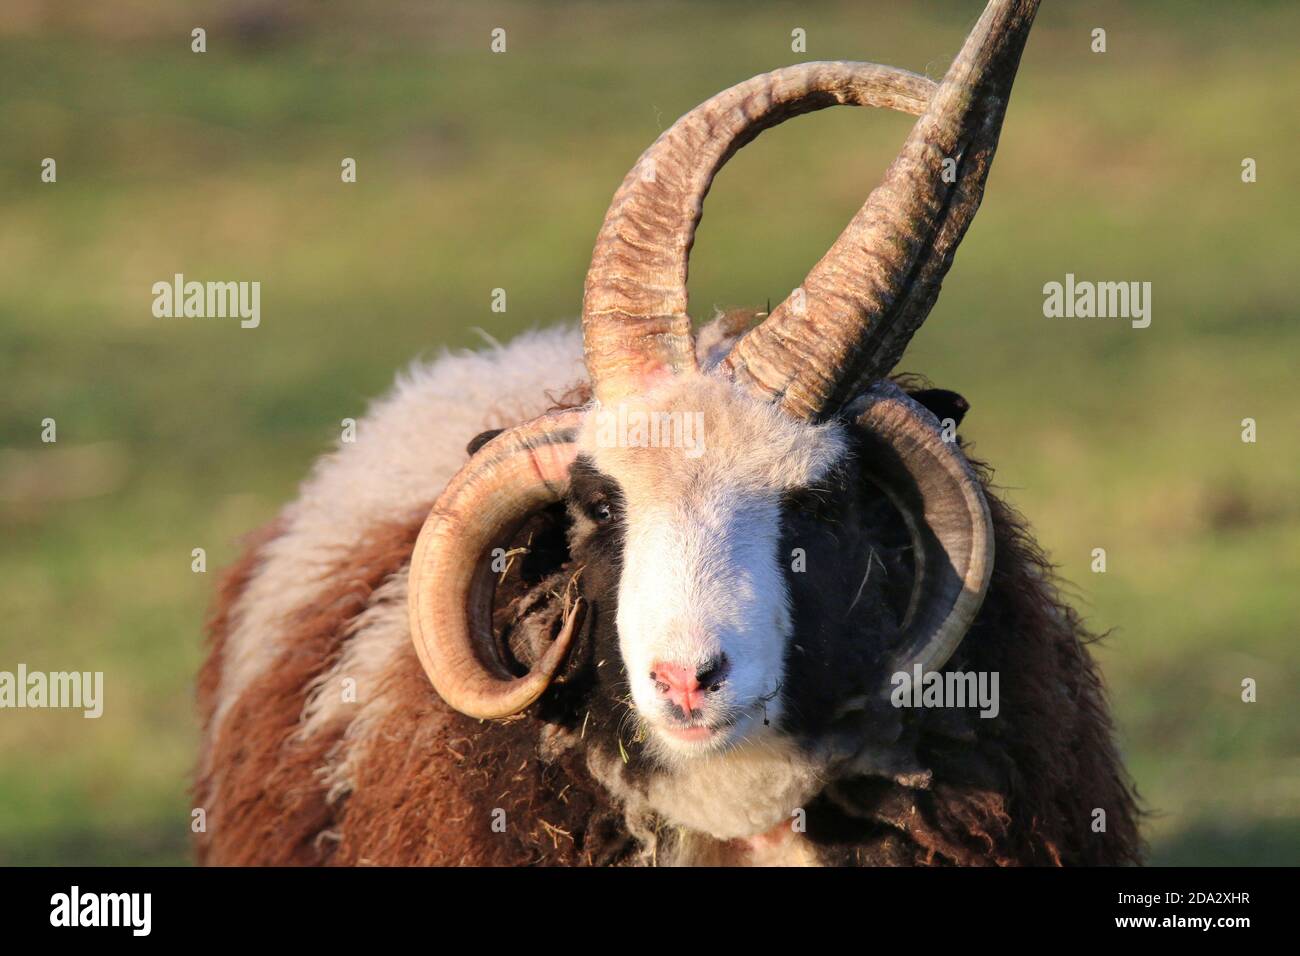 Four-horn-sheep, Jacob sheep (Ovis ammon f. aries), portrait, Germany Stock Photo